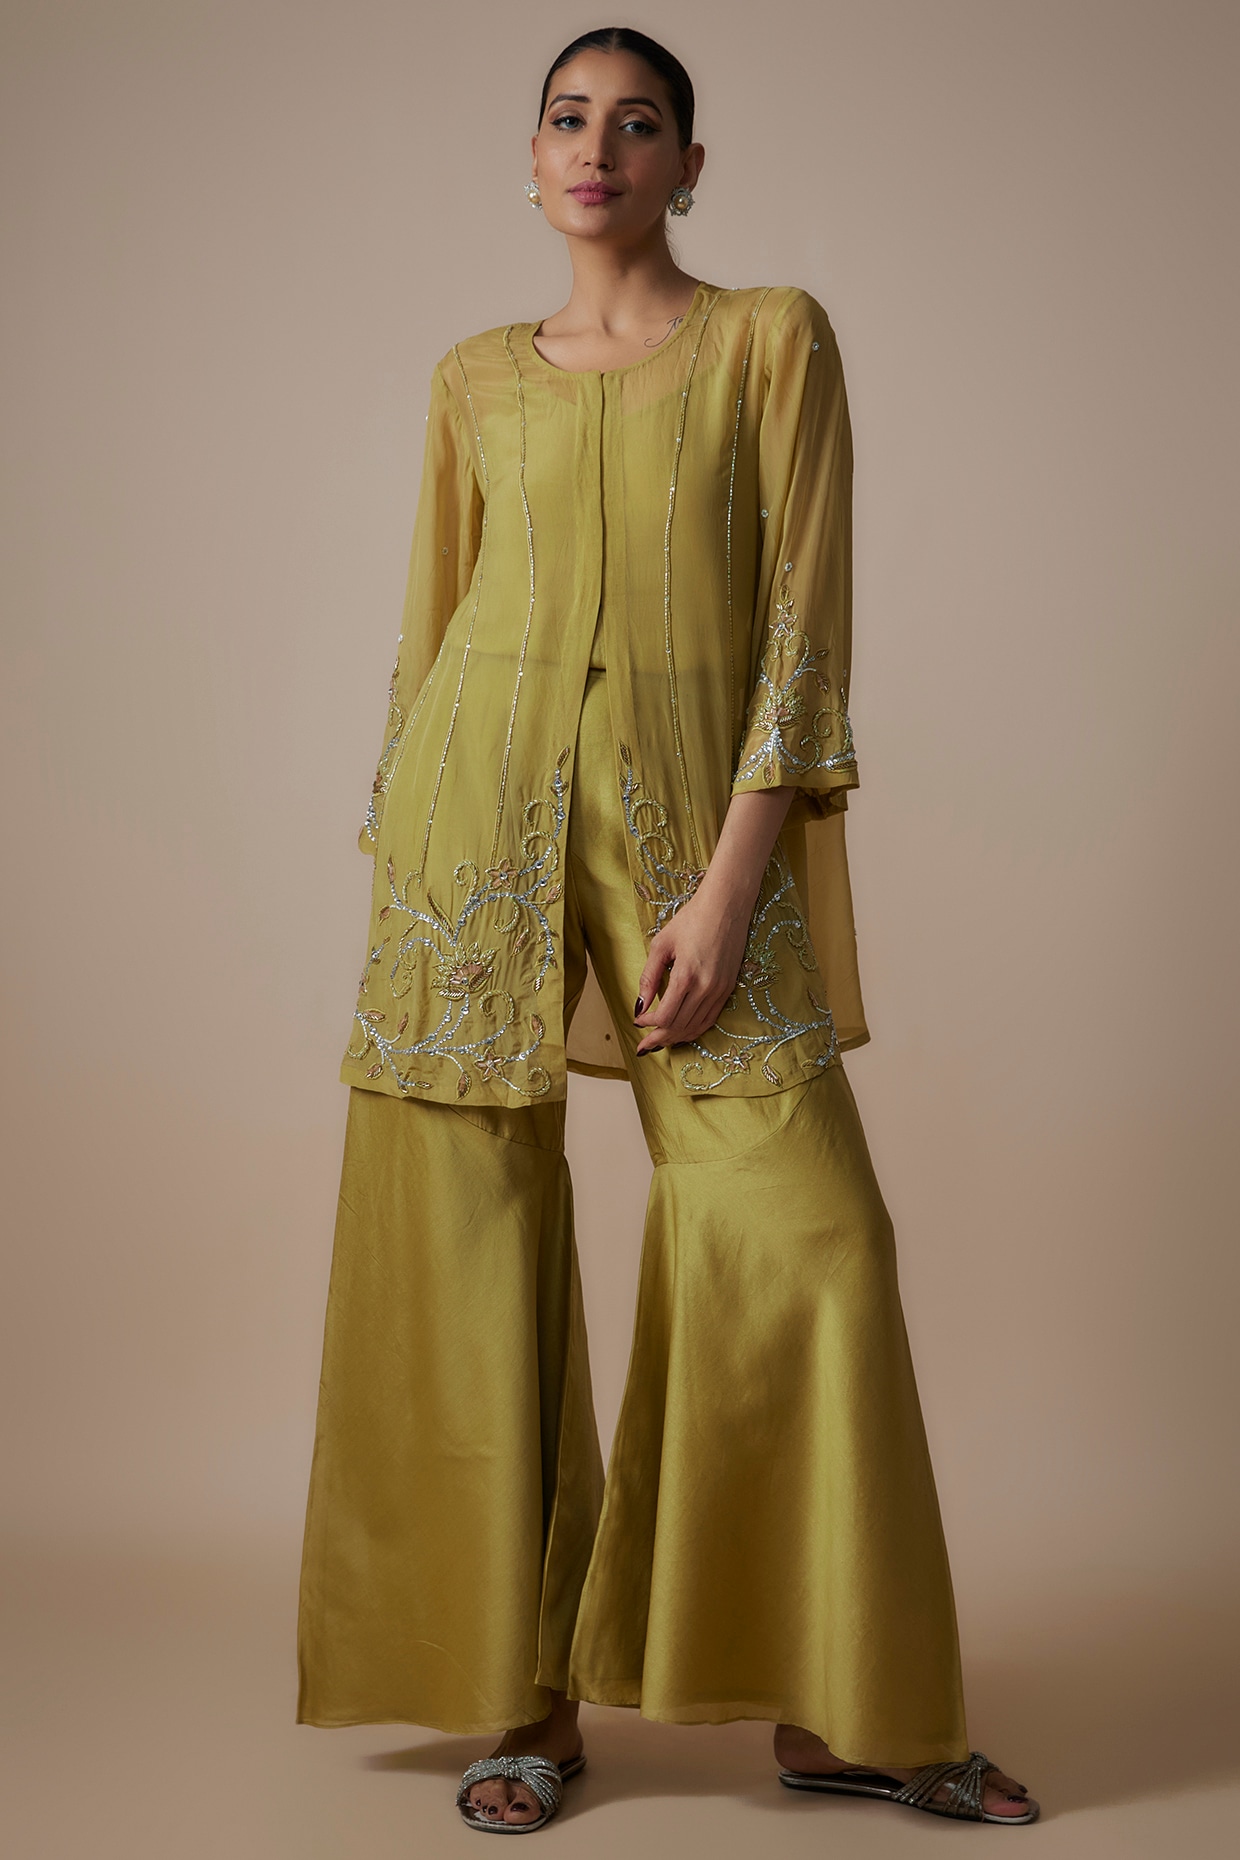 Latest Gharara Styles with Long Shirts (2021 Designs) | Top design fashion,  Off shoulder fashion, Long shirt